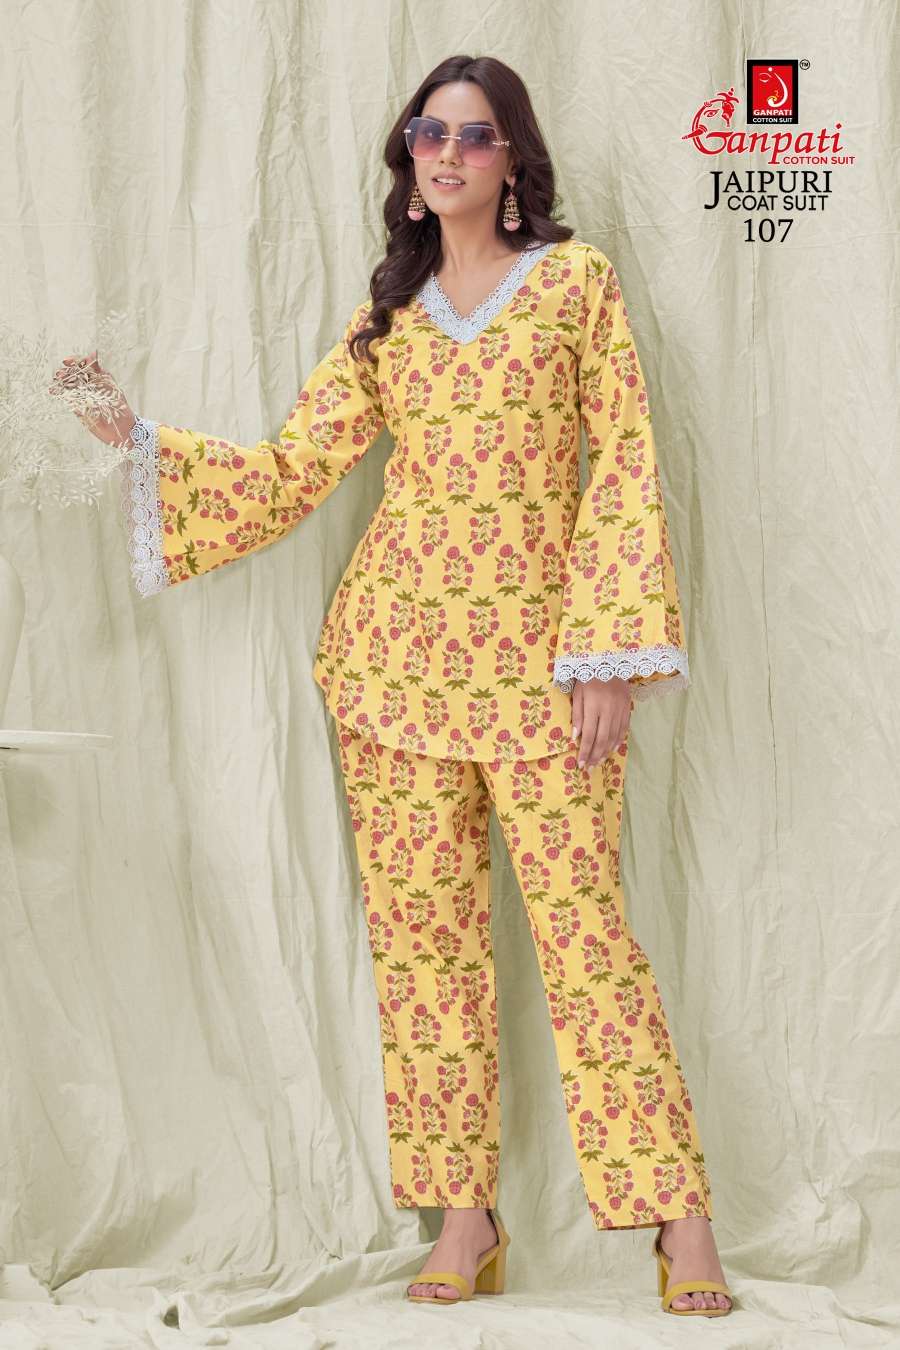 2020 Men's #Kurta Pajama Designs|Men's Shalwar Kameez|Gents Kurta Pajama  Design|Gents Shalwar Kameez - YouTube